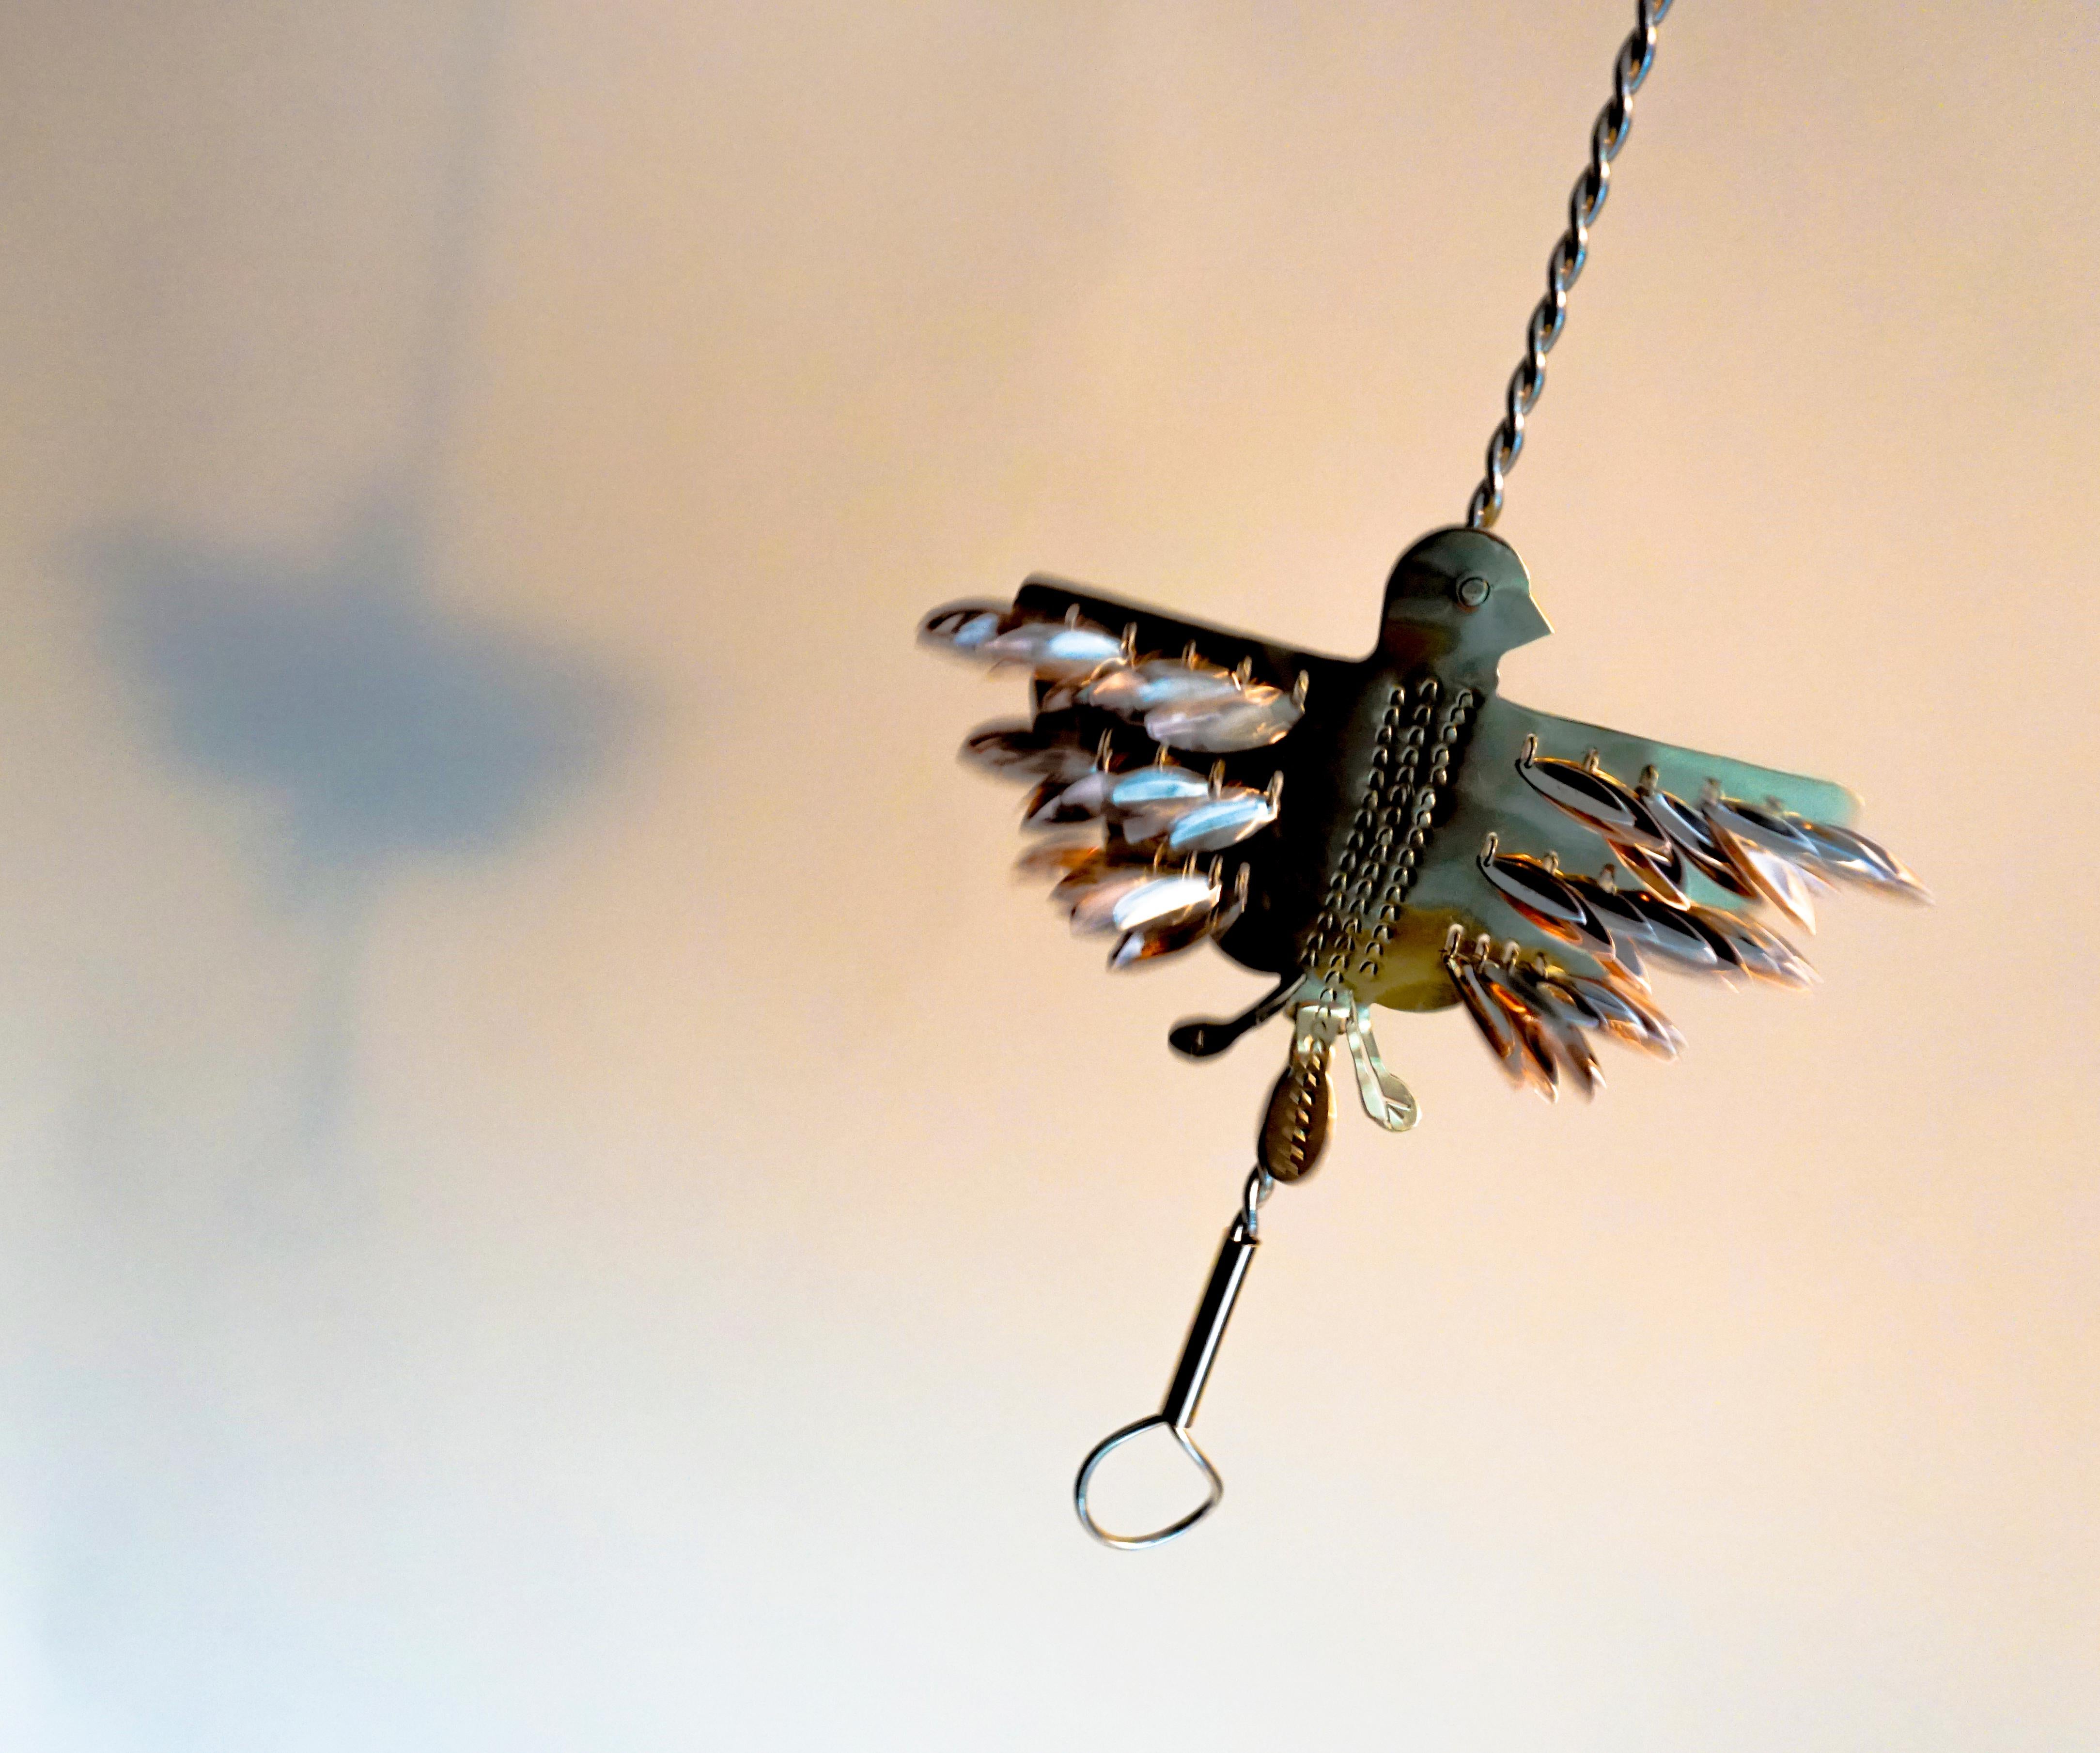 Mexican Little Bird Boy Toy by Lilia Cruz Corona Garduño